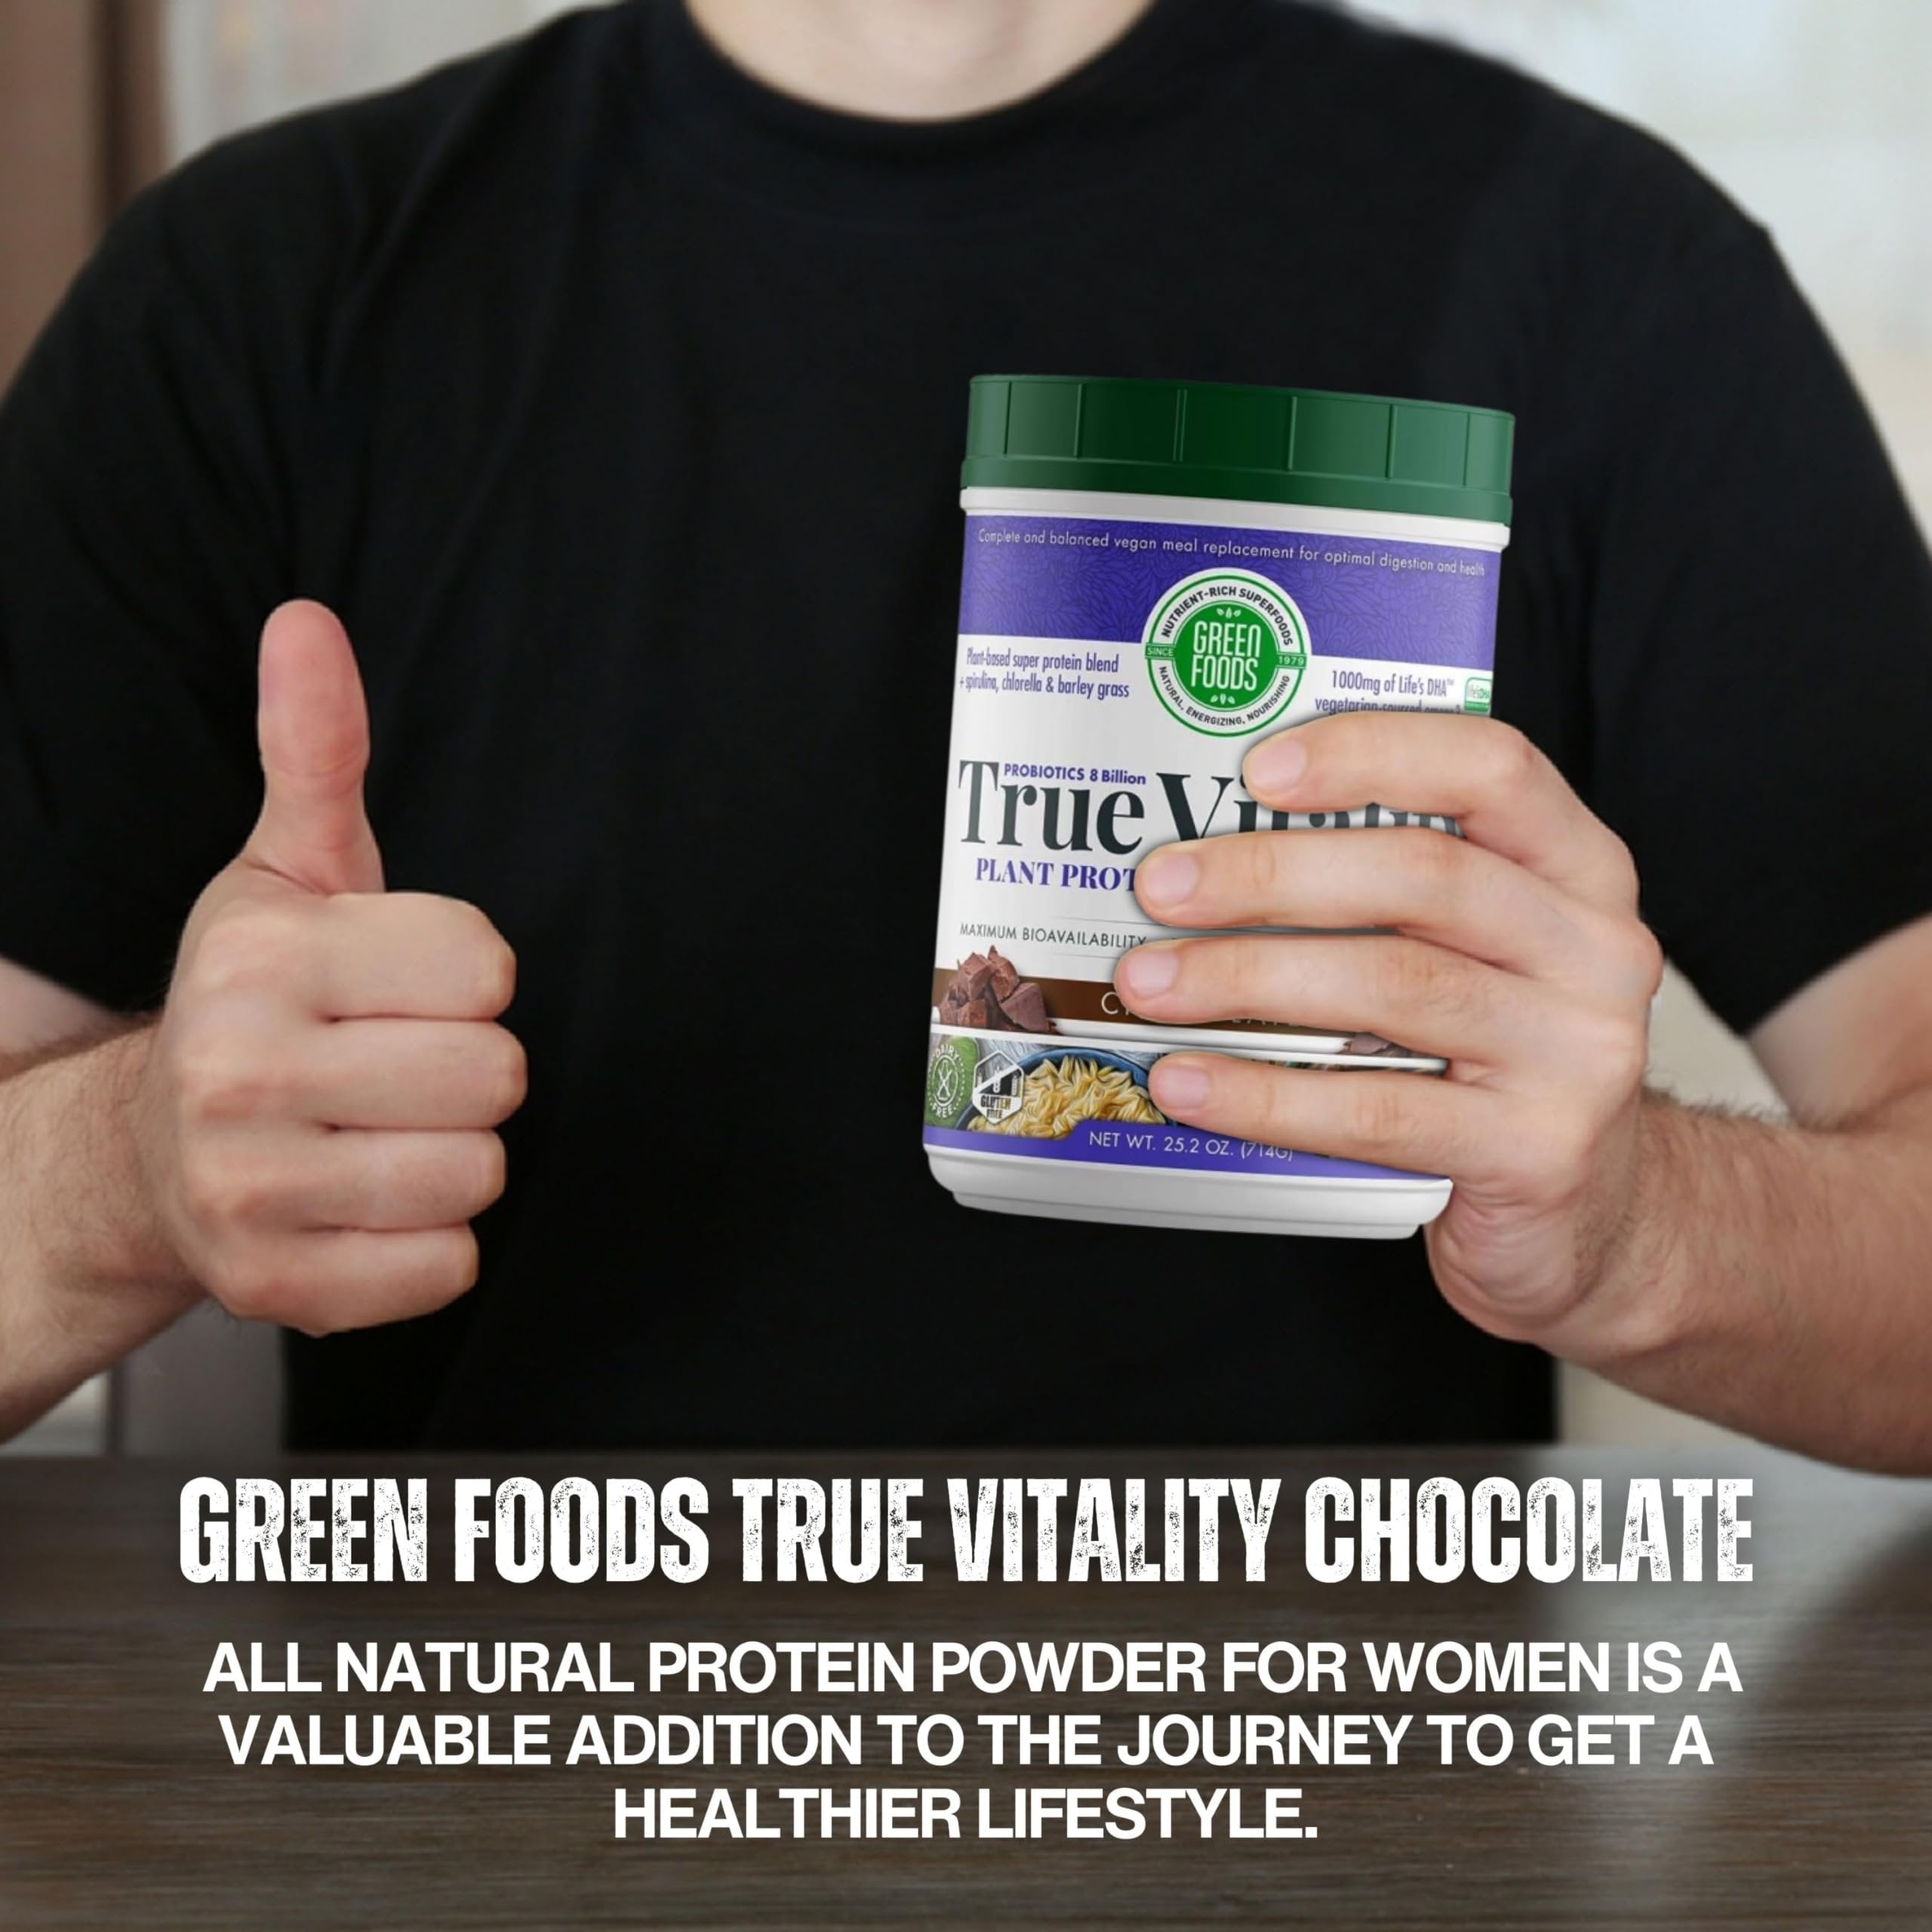 Green Foods True Vitality Plant Protein Shake with DHA Chocolate- 25.2 oz Protein Powder Gluten Free Breakfast Shake Powder and Multi-Purpose Key Chain